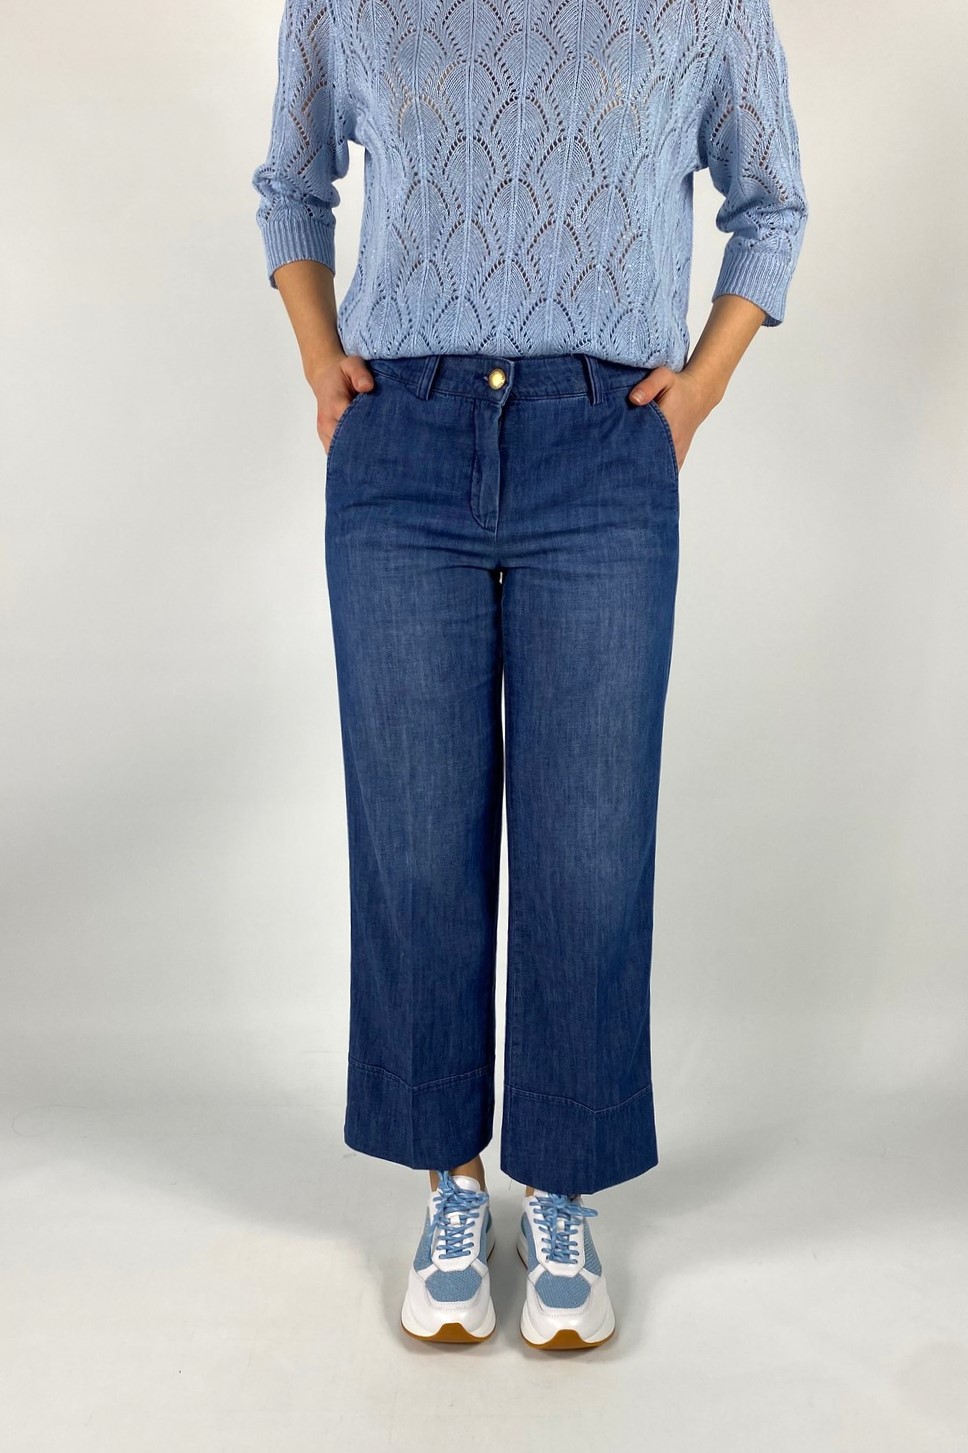 Jeans summer denim in de kleur used blue van het merk Seductive